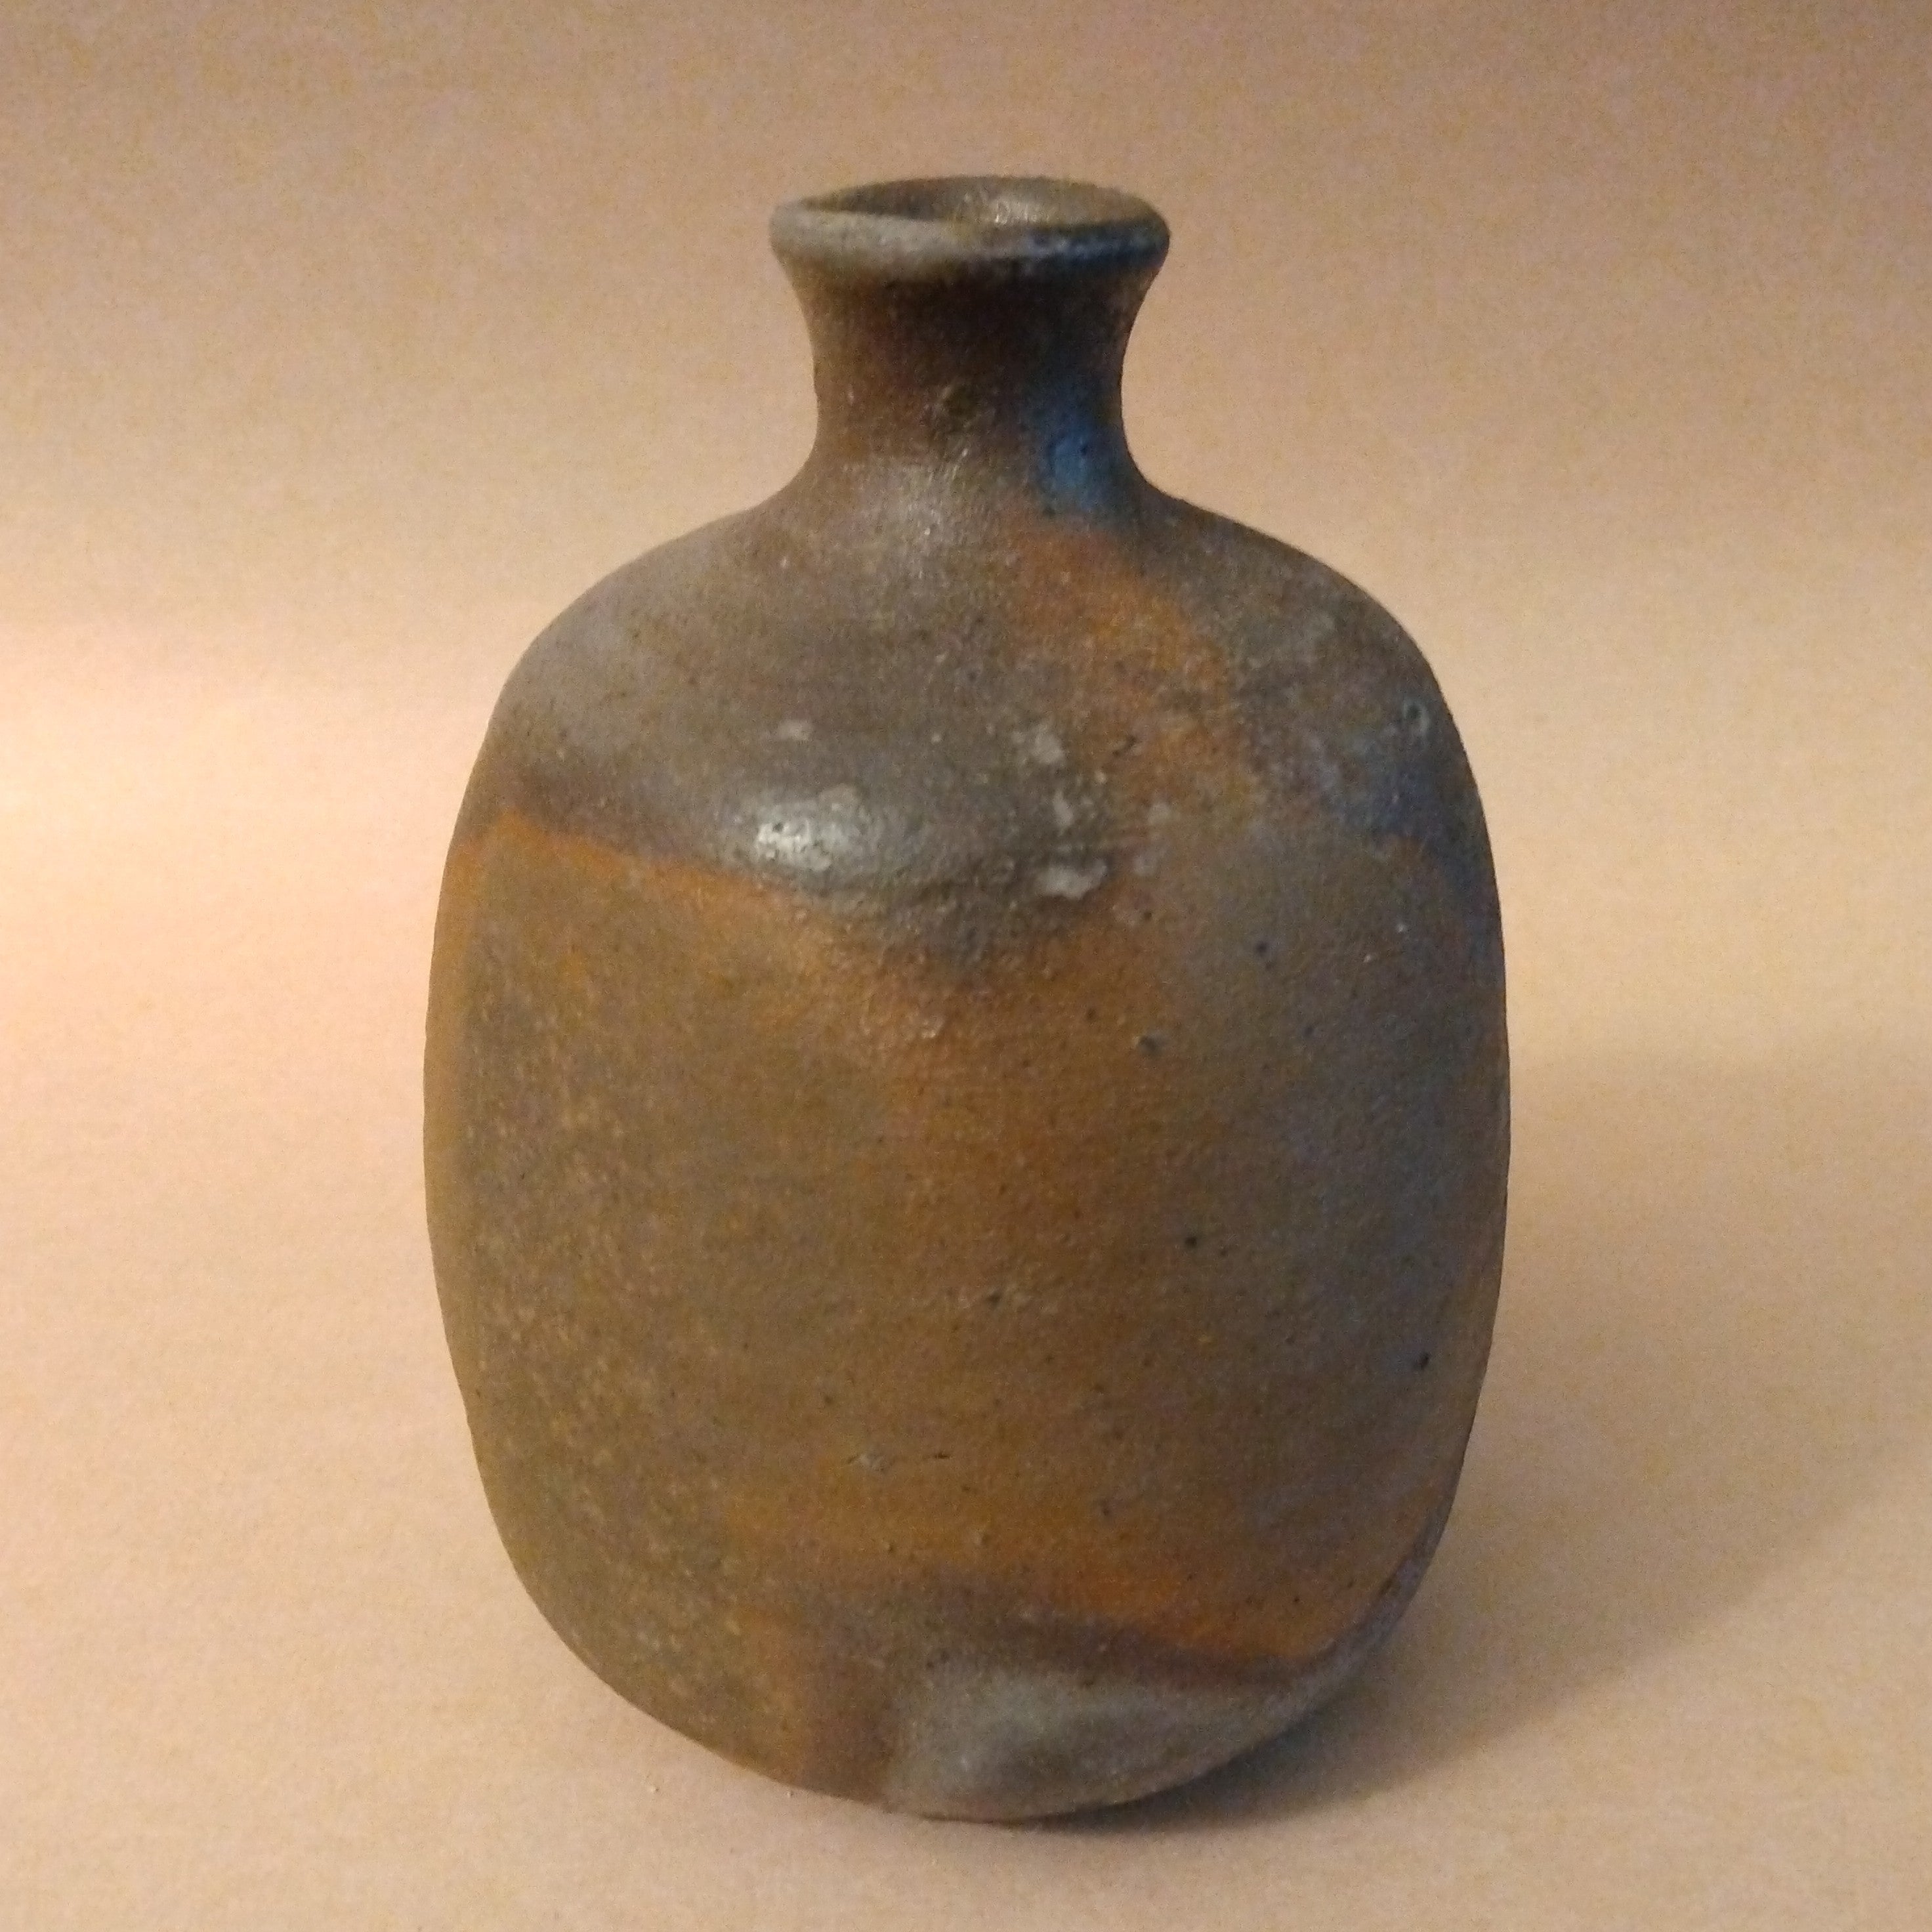 Bizen-yaki Tokkuri (Sake Bottle), attributed to Motoyama Yaeno; Thiel Collection